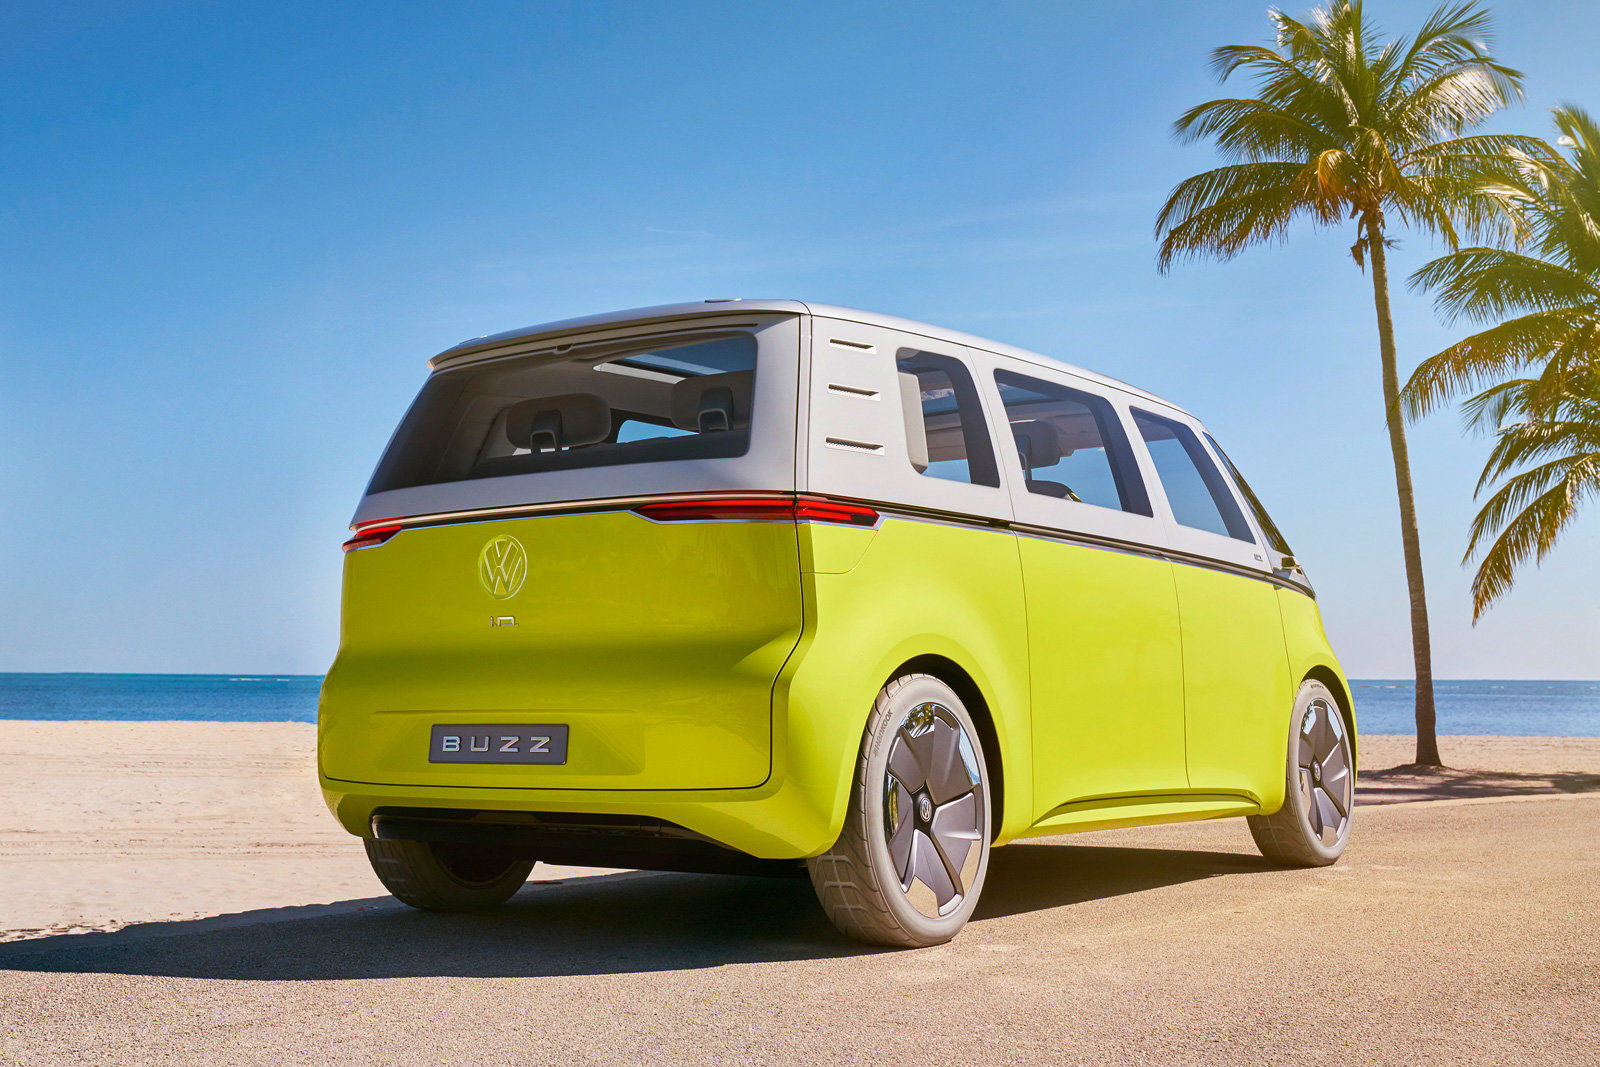 VWとカタール、2022年までに自動運転シャトル運行する都市計画発表。電気自動車I.D.Buzzを35台投入